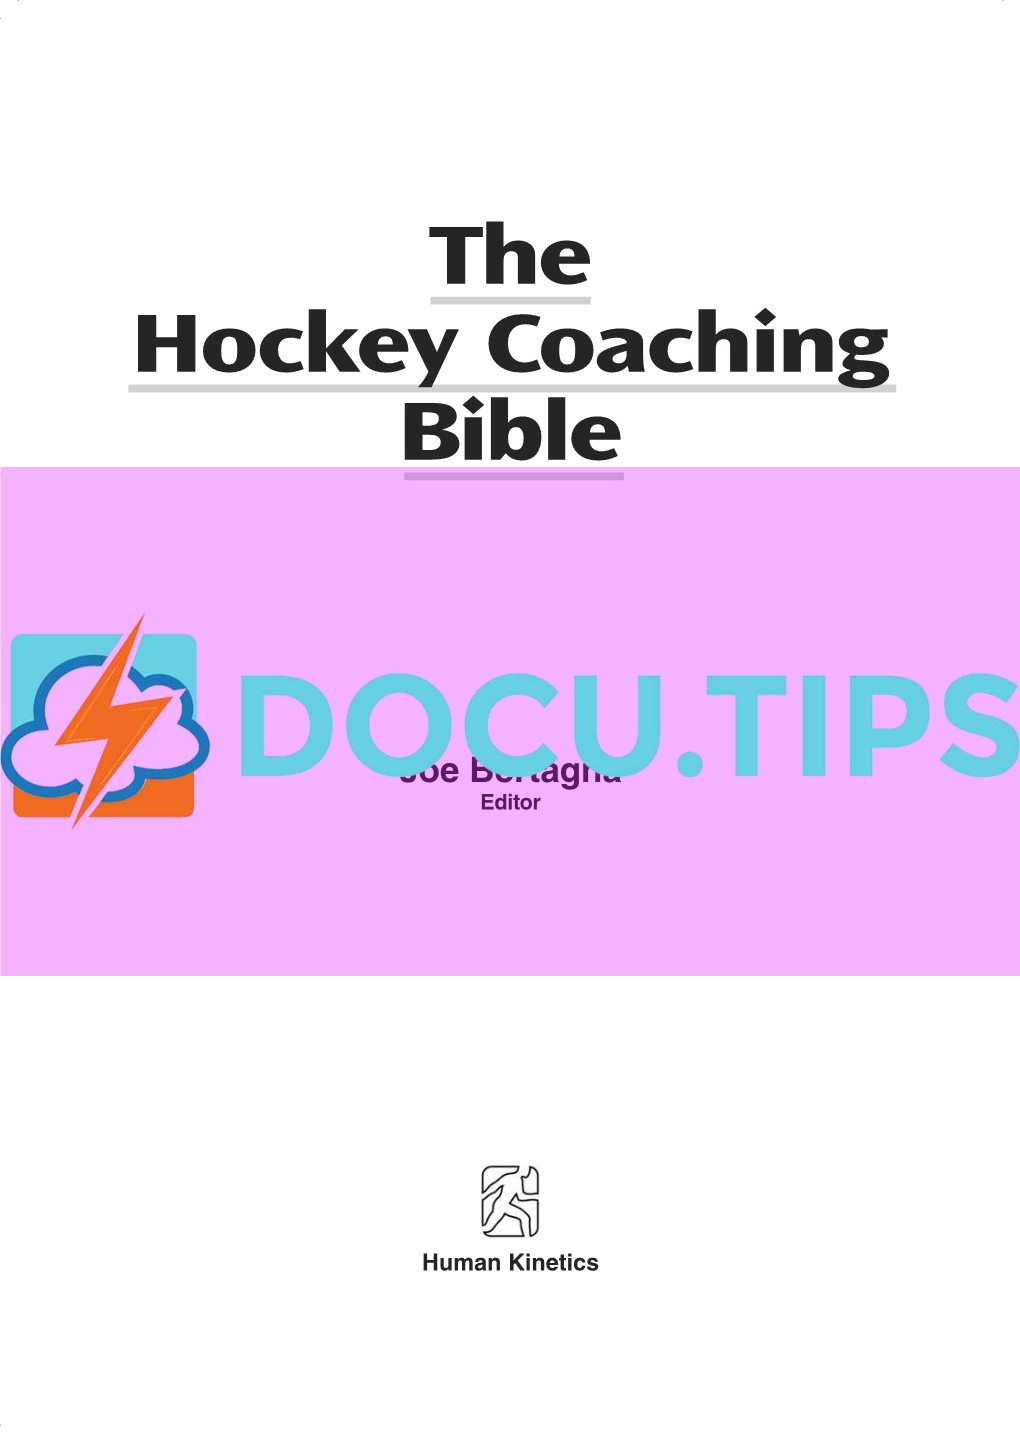 Bertagna J Ed the Hockey Coaching Bible